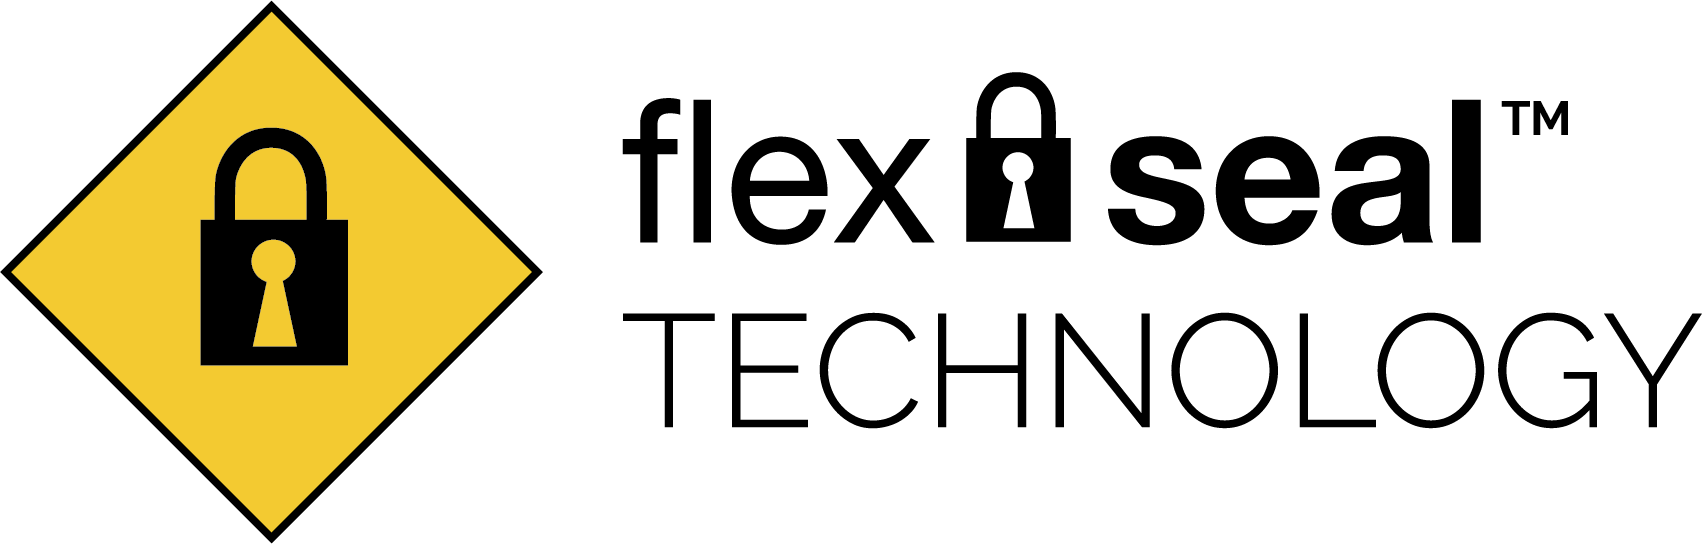 flex seal technology logo